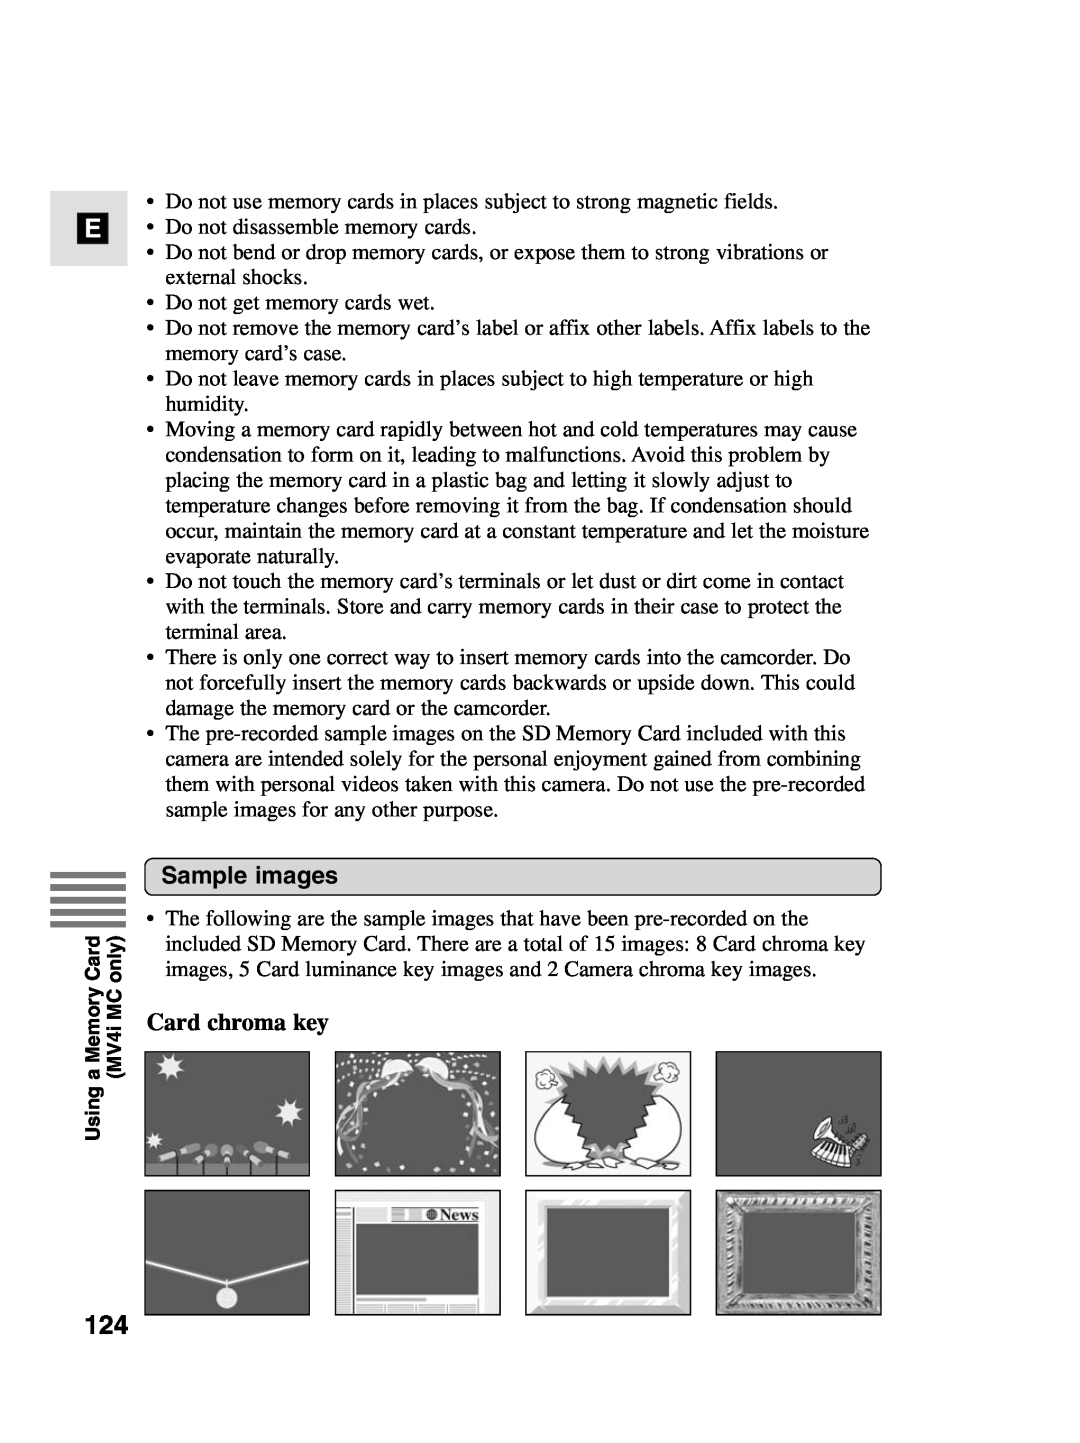 Canon MV4i MC instruction manual Card chroma key, Sample images 